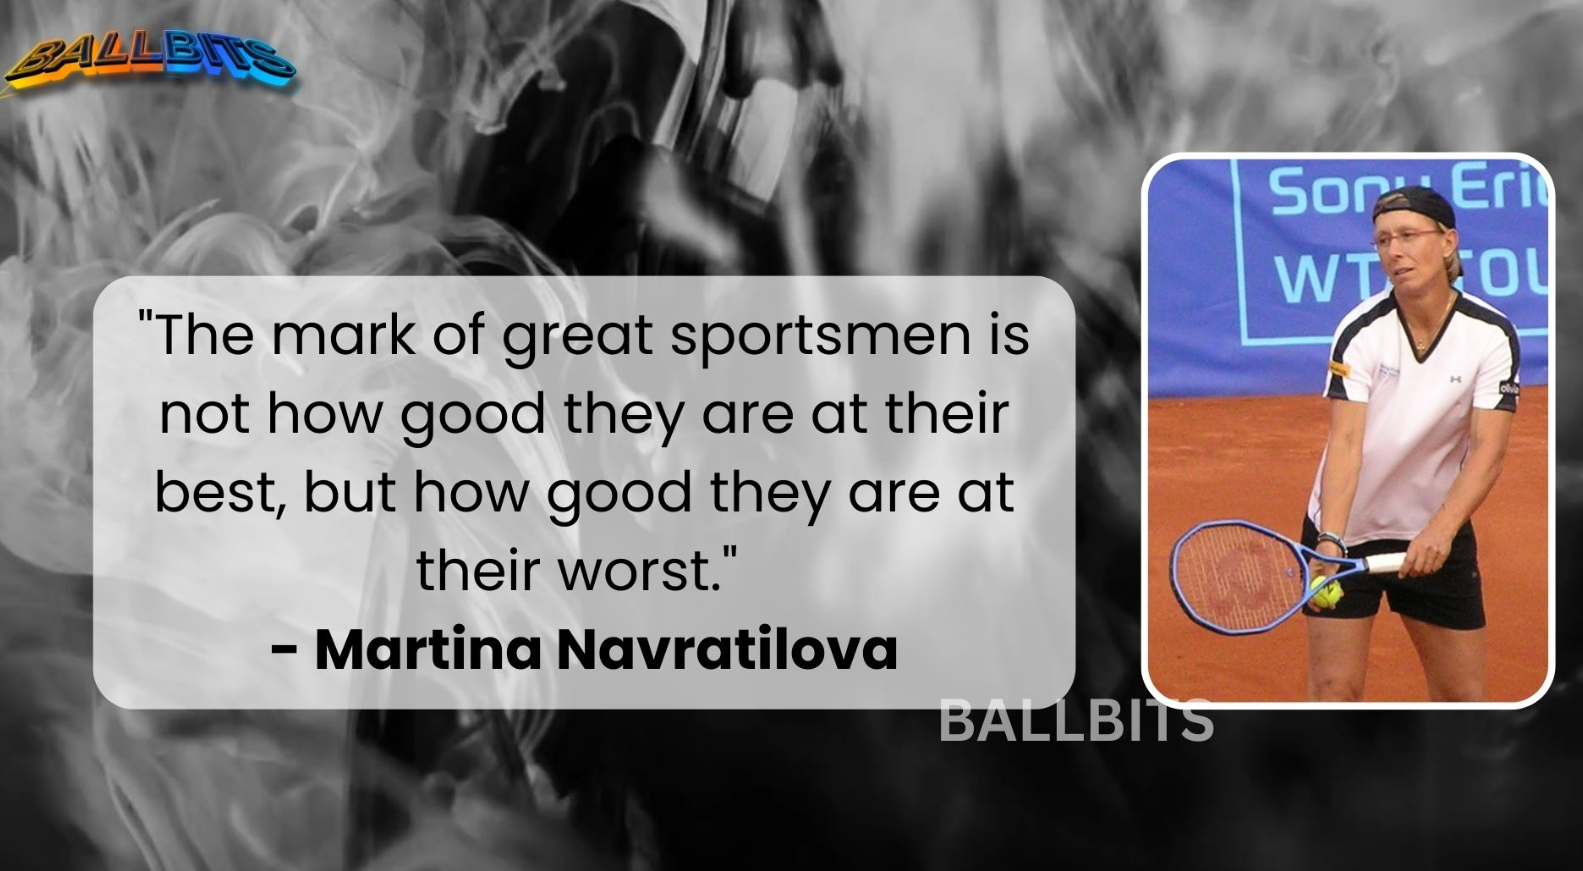 "The mark of great sportsmen is not how good they are at their best, but how good they are at their worst." - Martina Navratilova